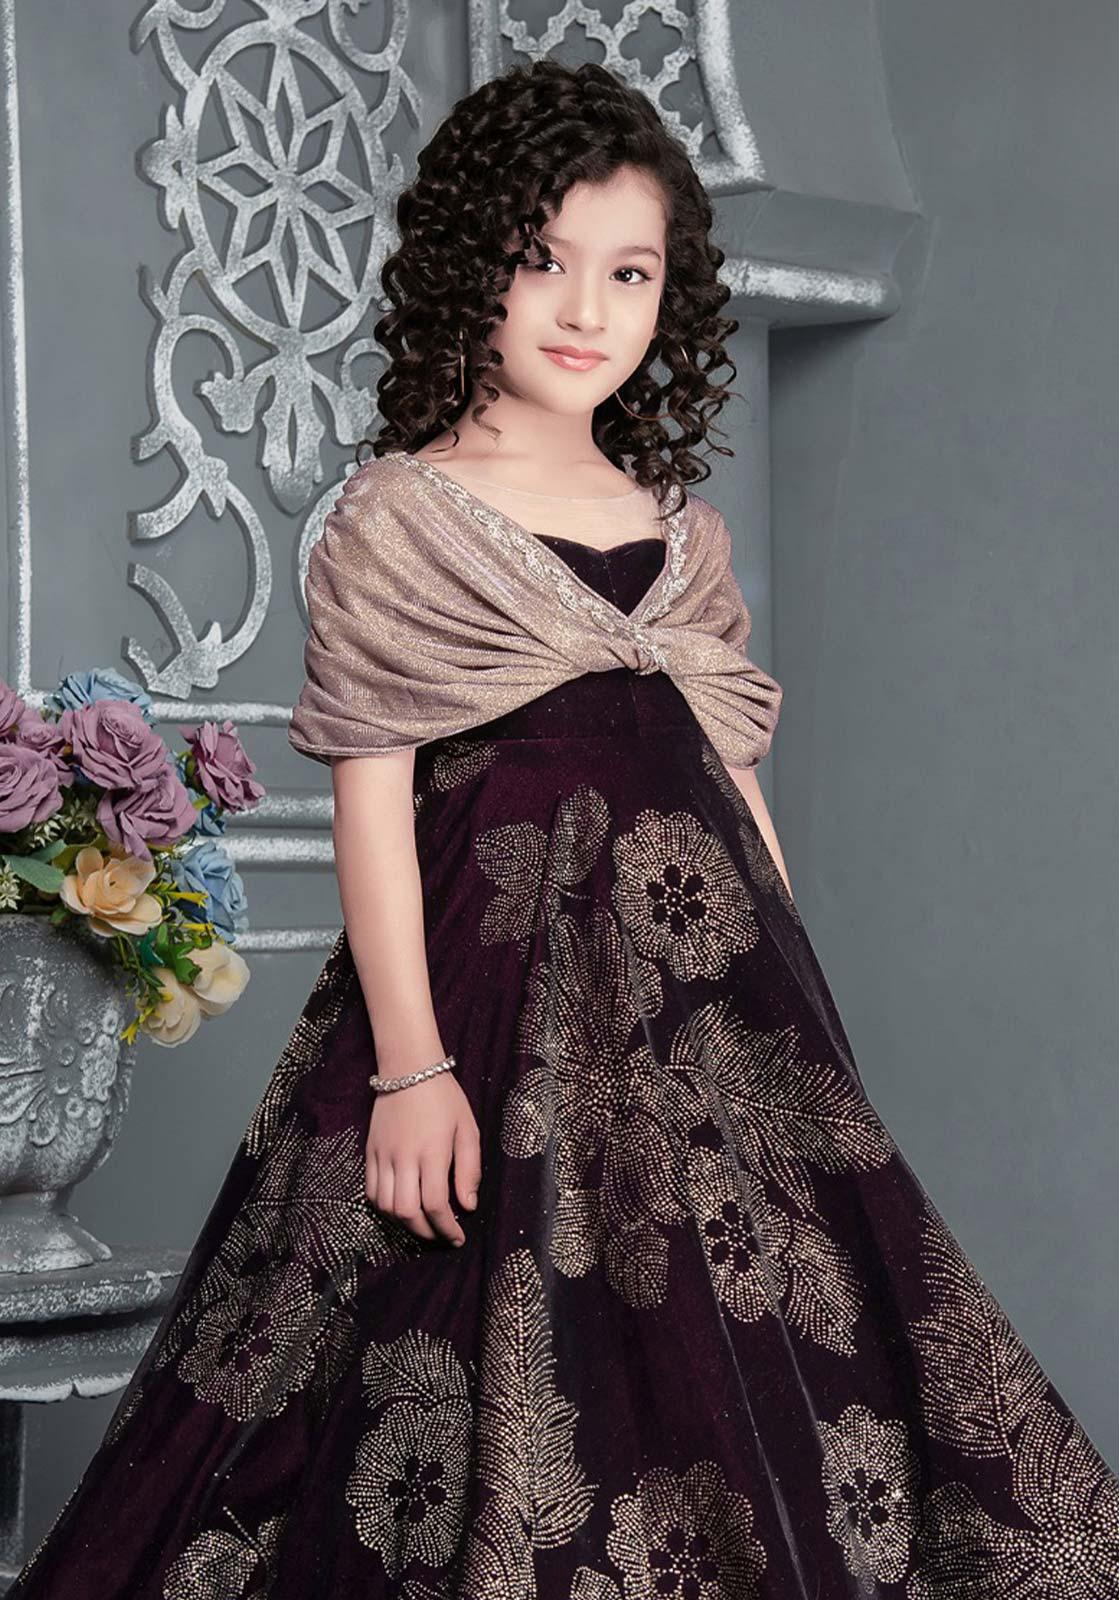 Designer Magenta Velvet Butterfly Sleeve Gown with Exquisite Handwork for Girls - Lagorii Kids